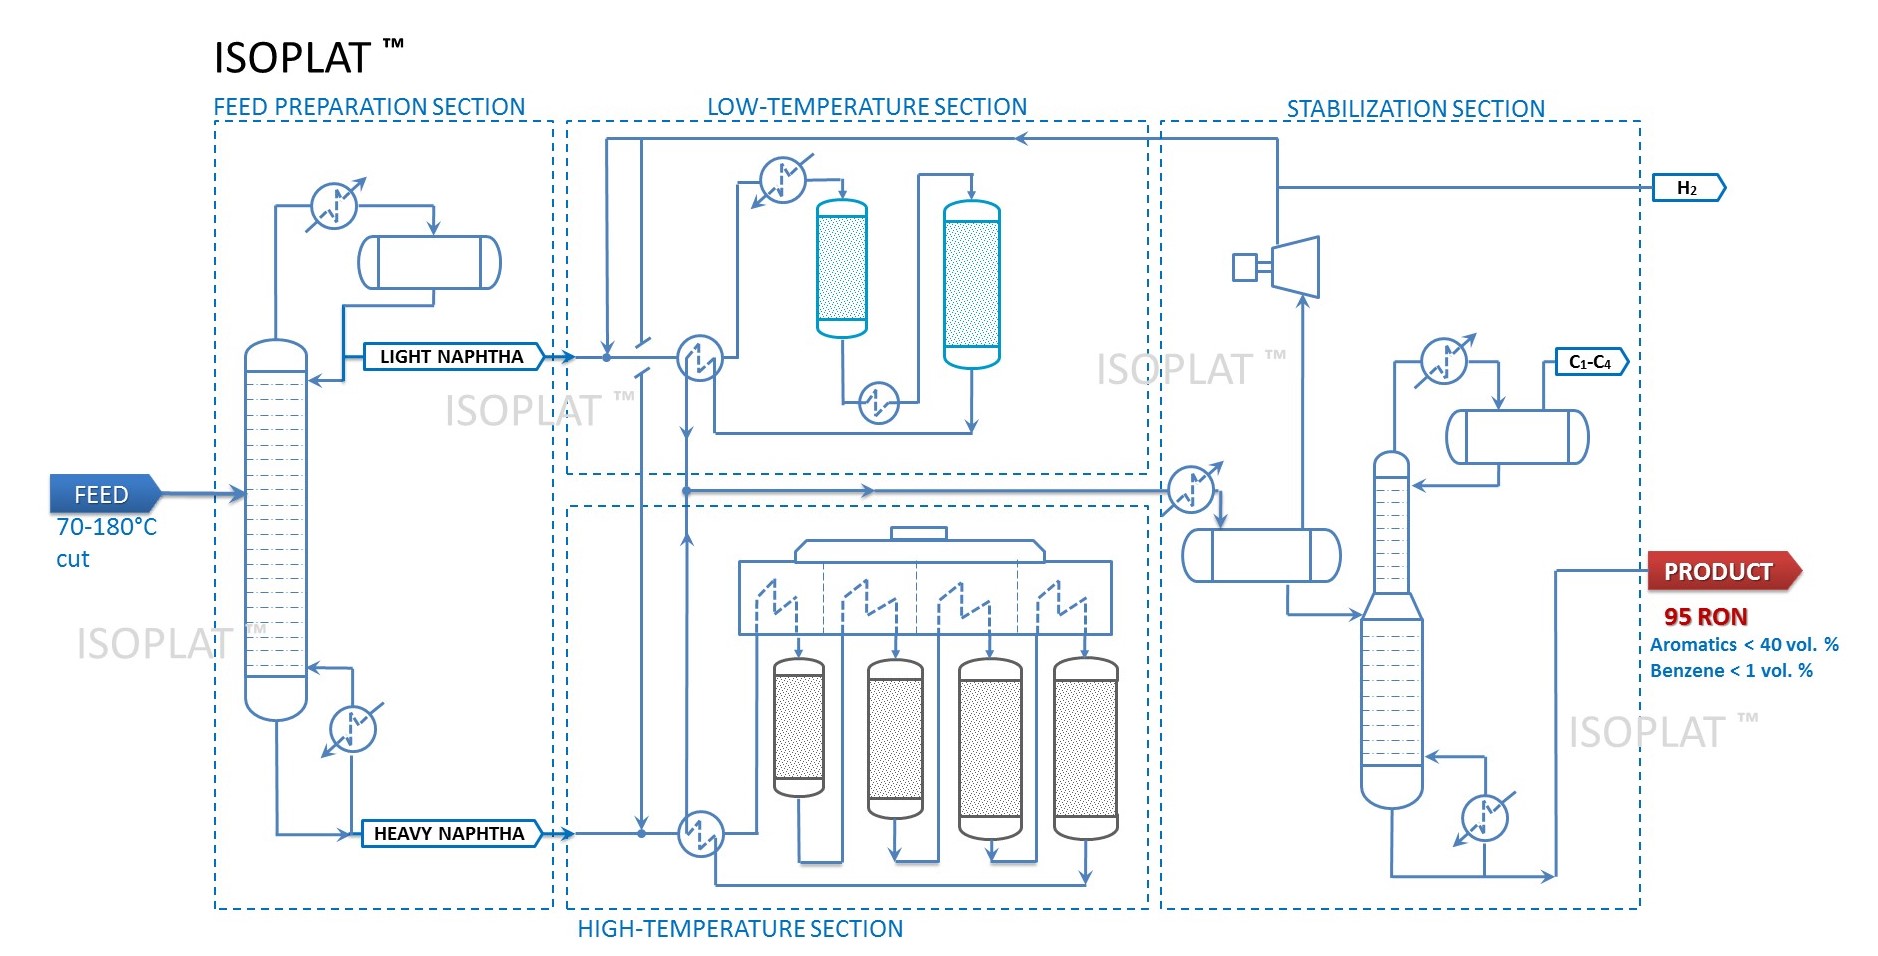 ISOPLAT process diagram